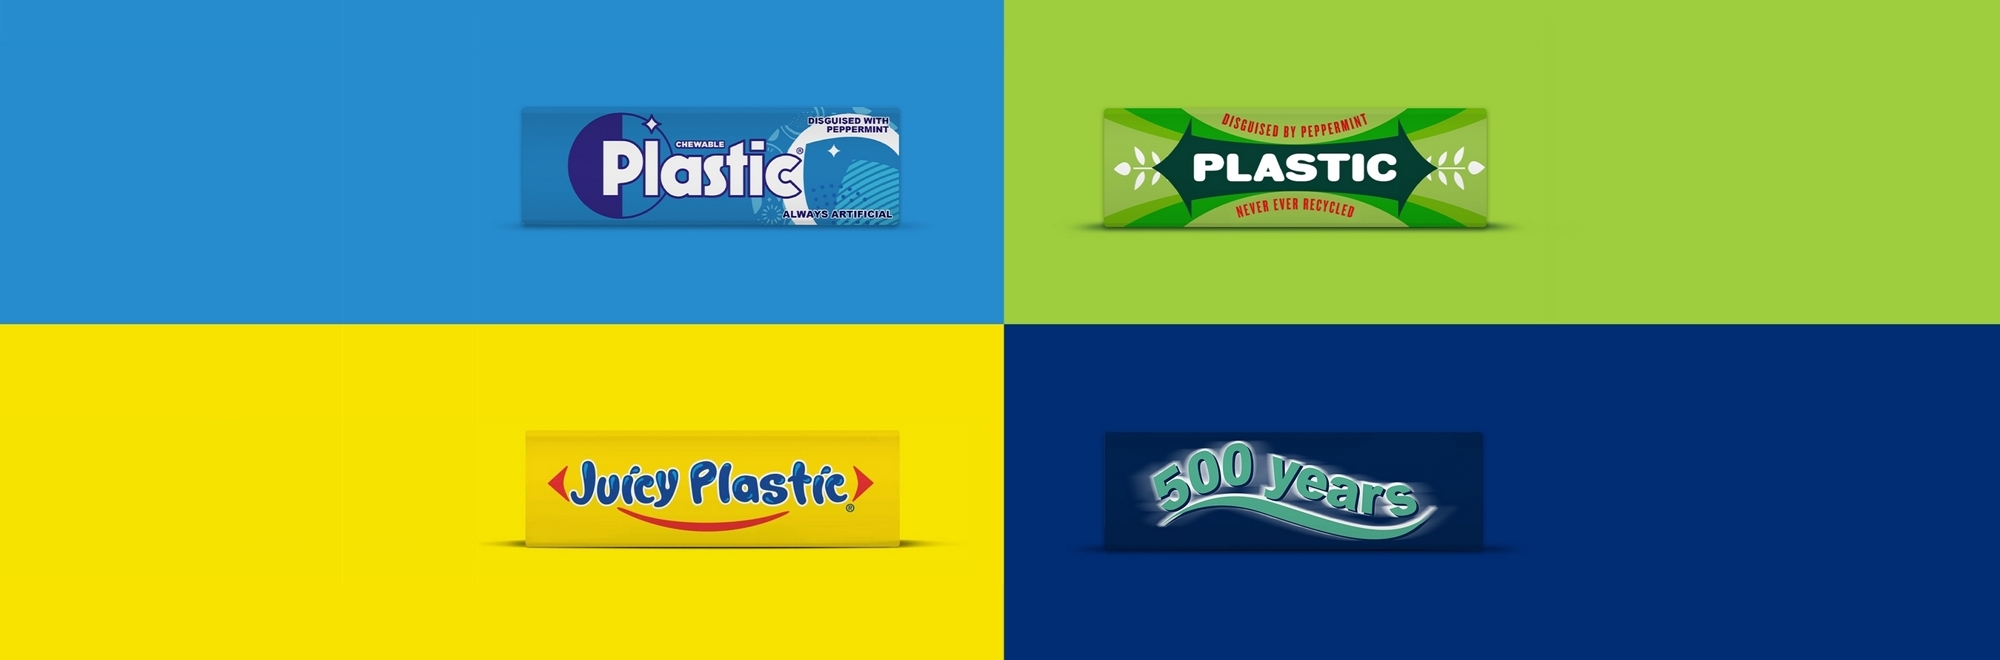 Nuud encourages people to ‘Chew Plants Not Plastic’ exposing big gum’s plastic problem